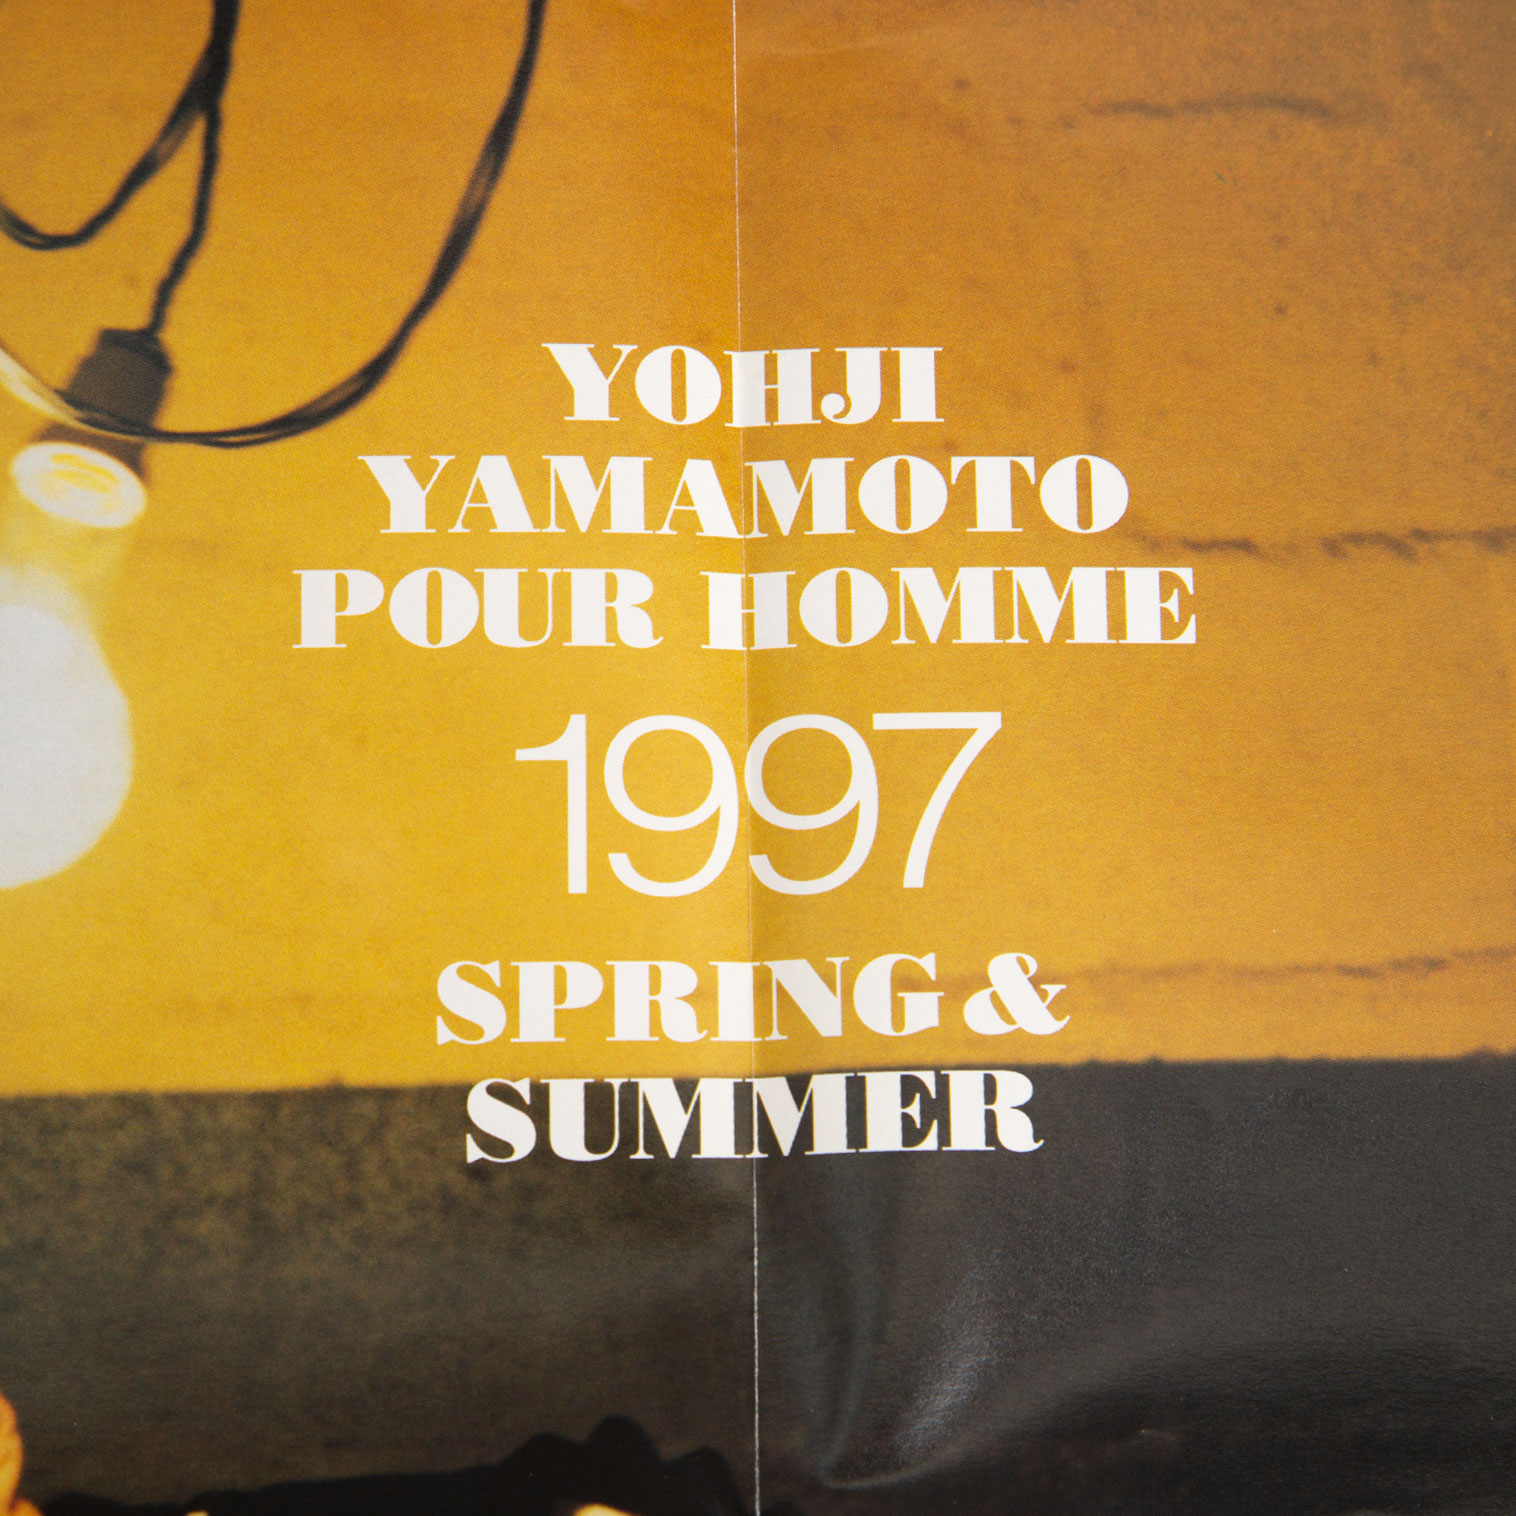 Yohji Yamamoto POUR HOMME SPRING – SUMMER 1997 Invitation Card